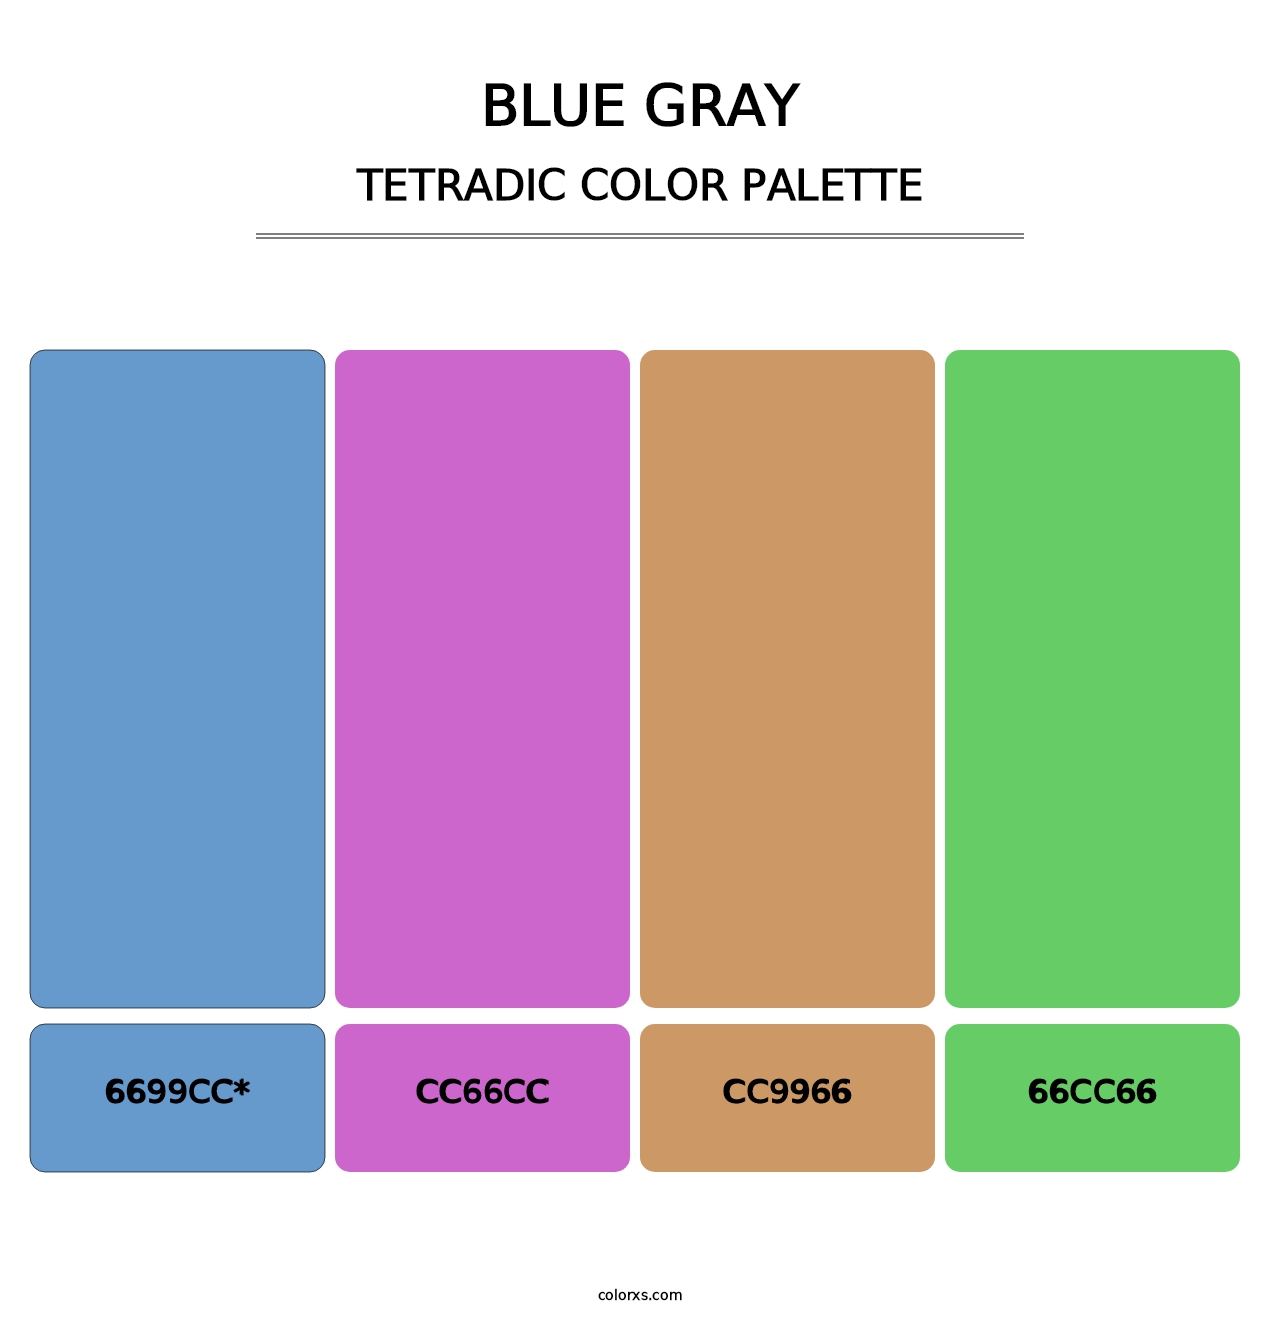 Blue Gray - Tetradic Color Palette